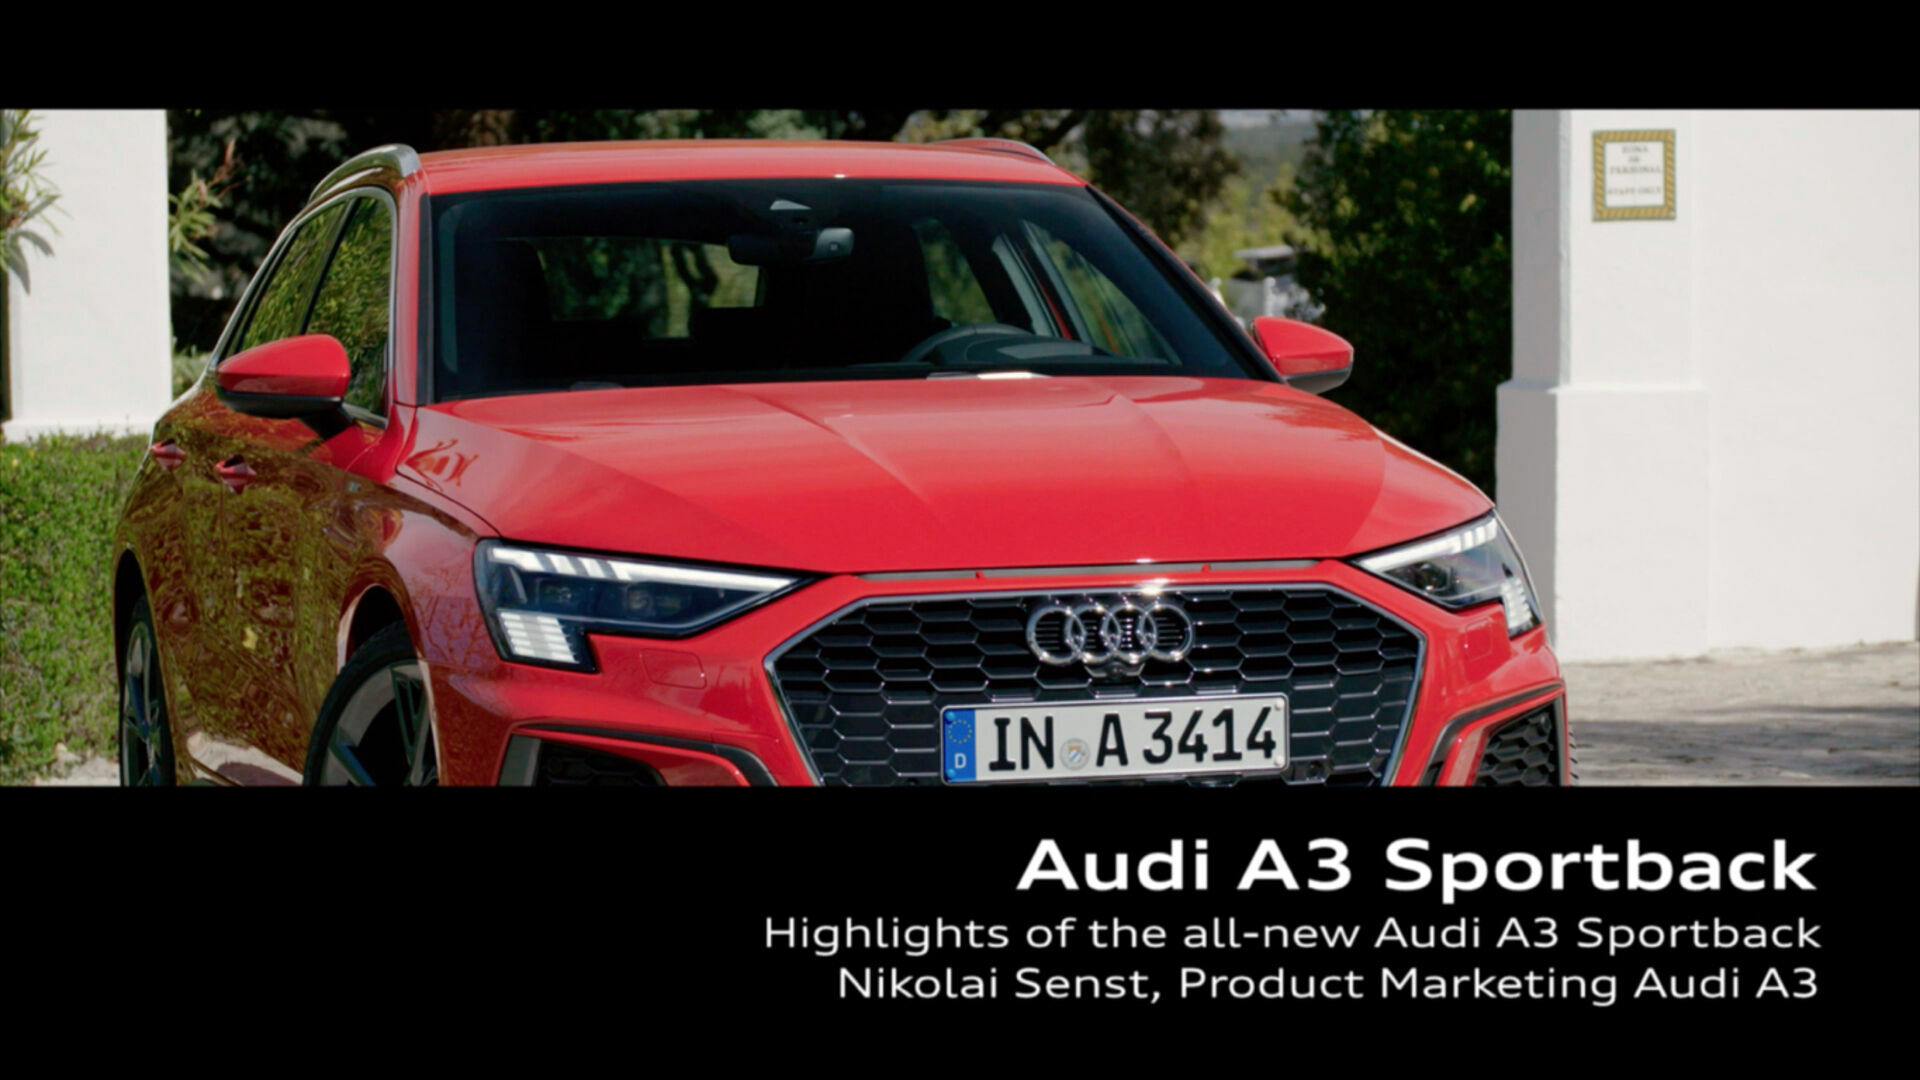 Footage: Audi A3 Sportback highlights